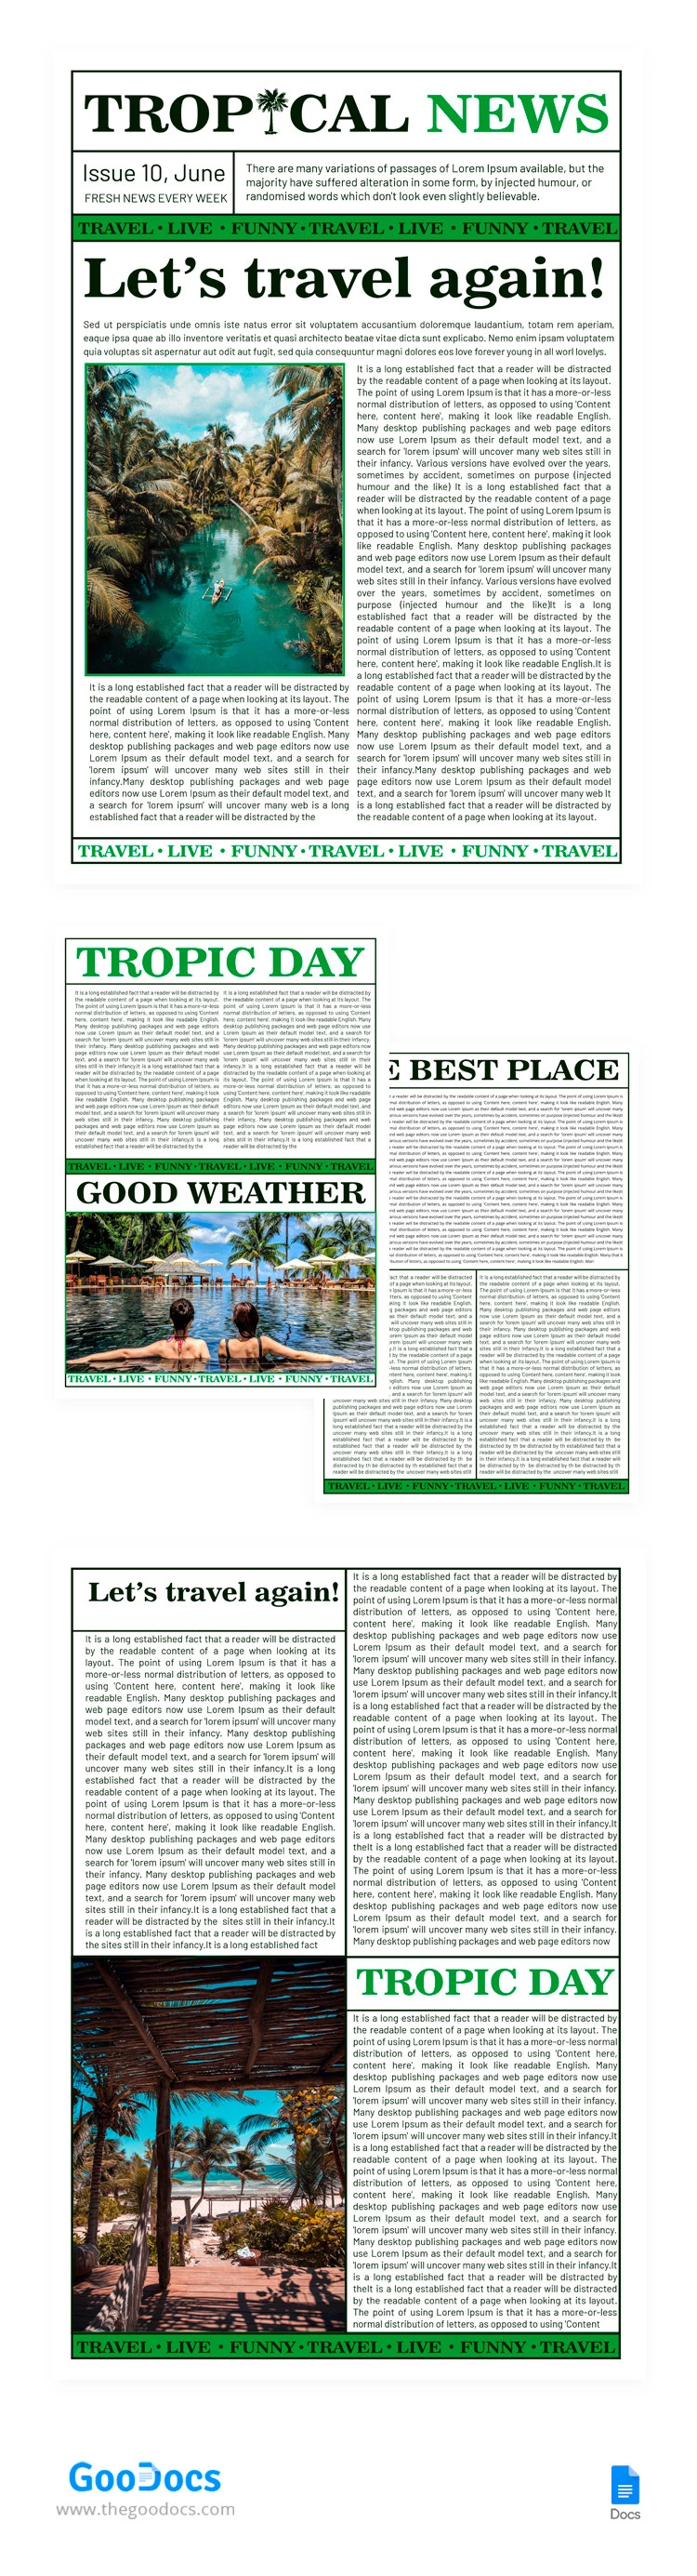 Tropical Newspaper - free Google Docs Template - 10065441